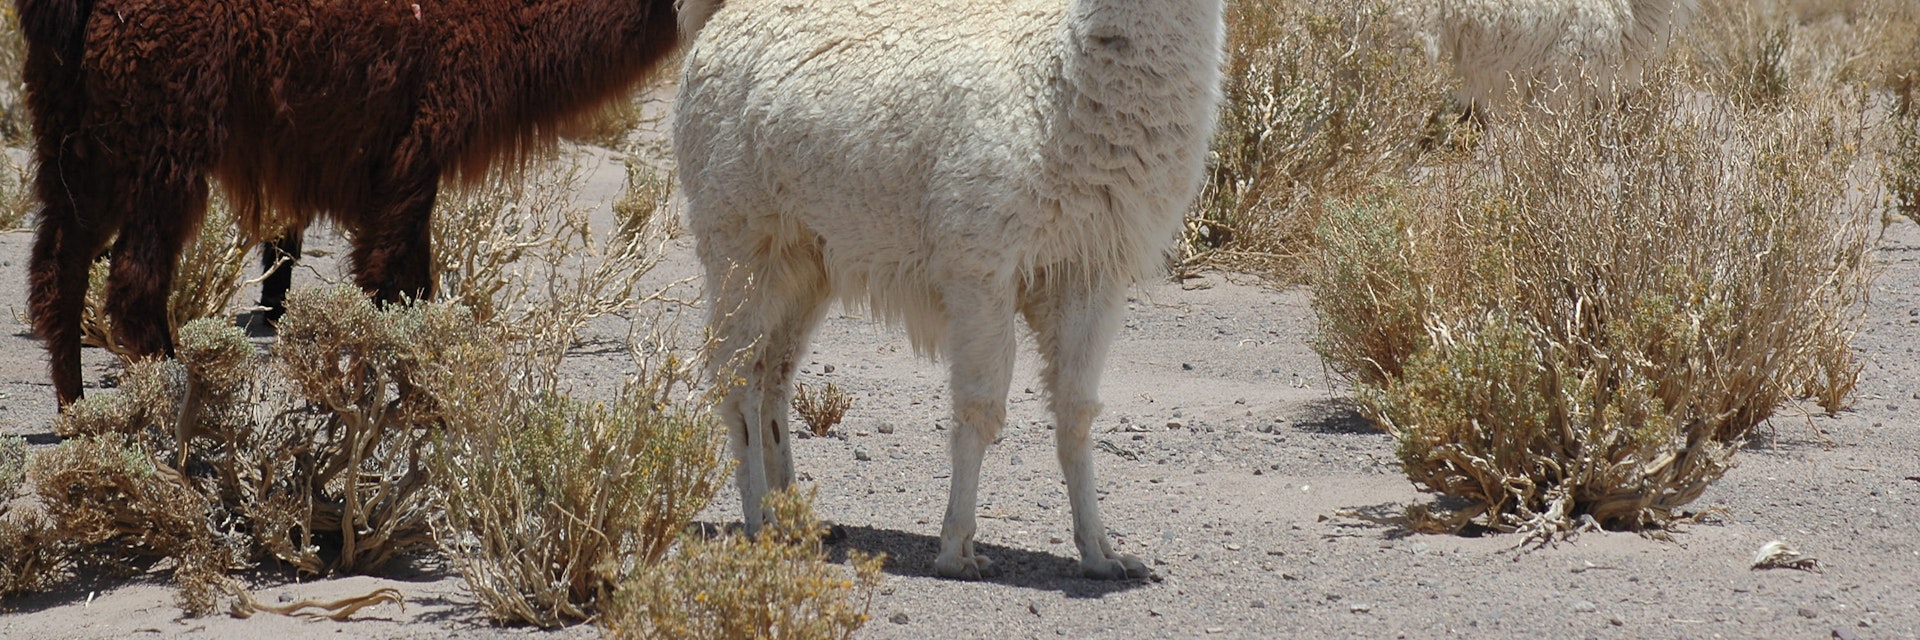 Wild llamas in the desert of Purmamarca.